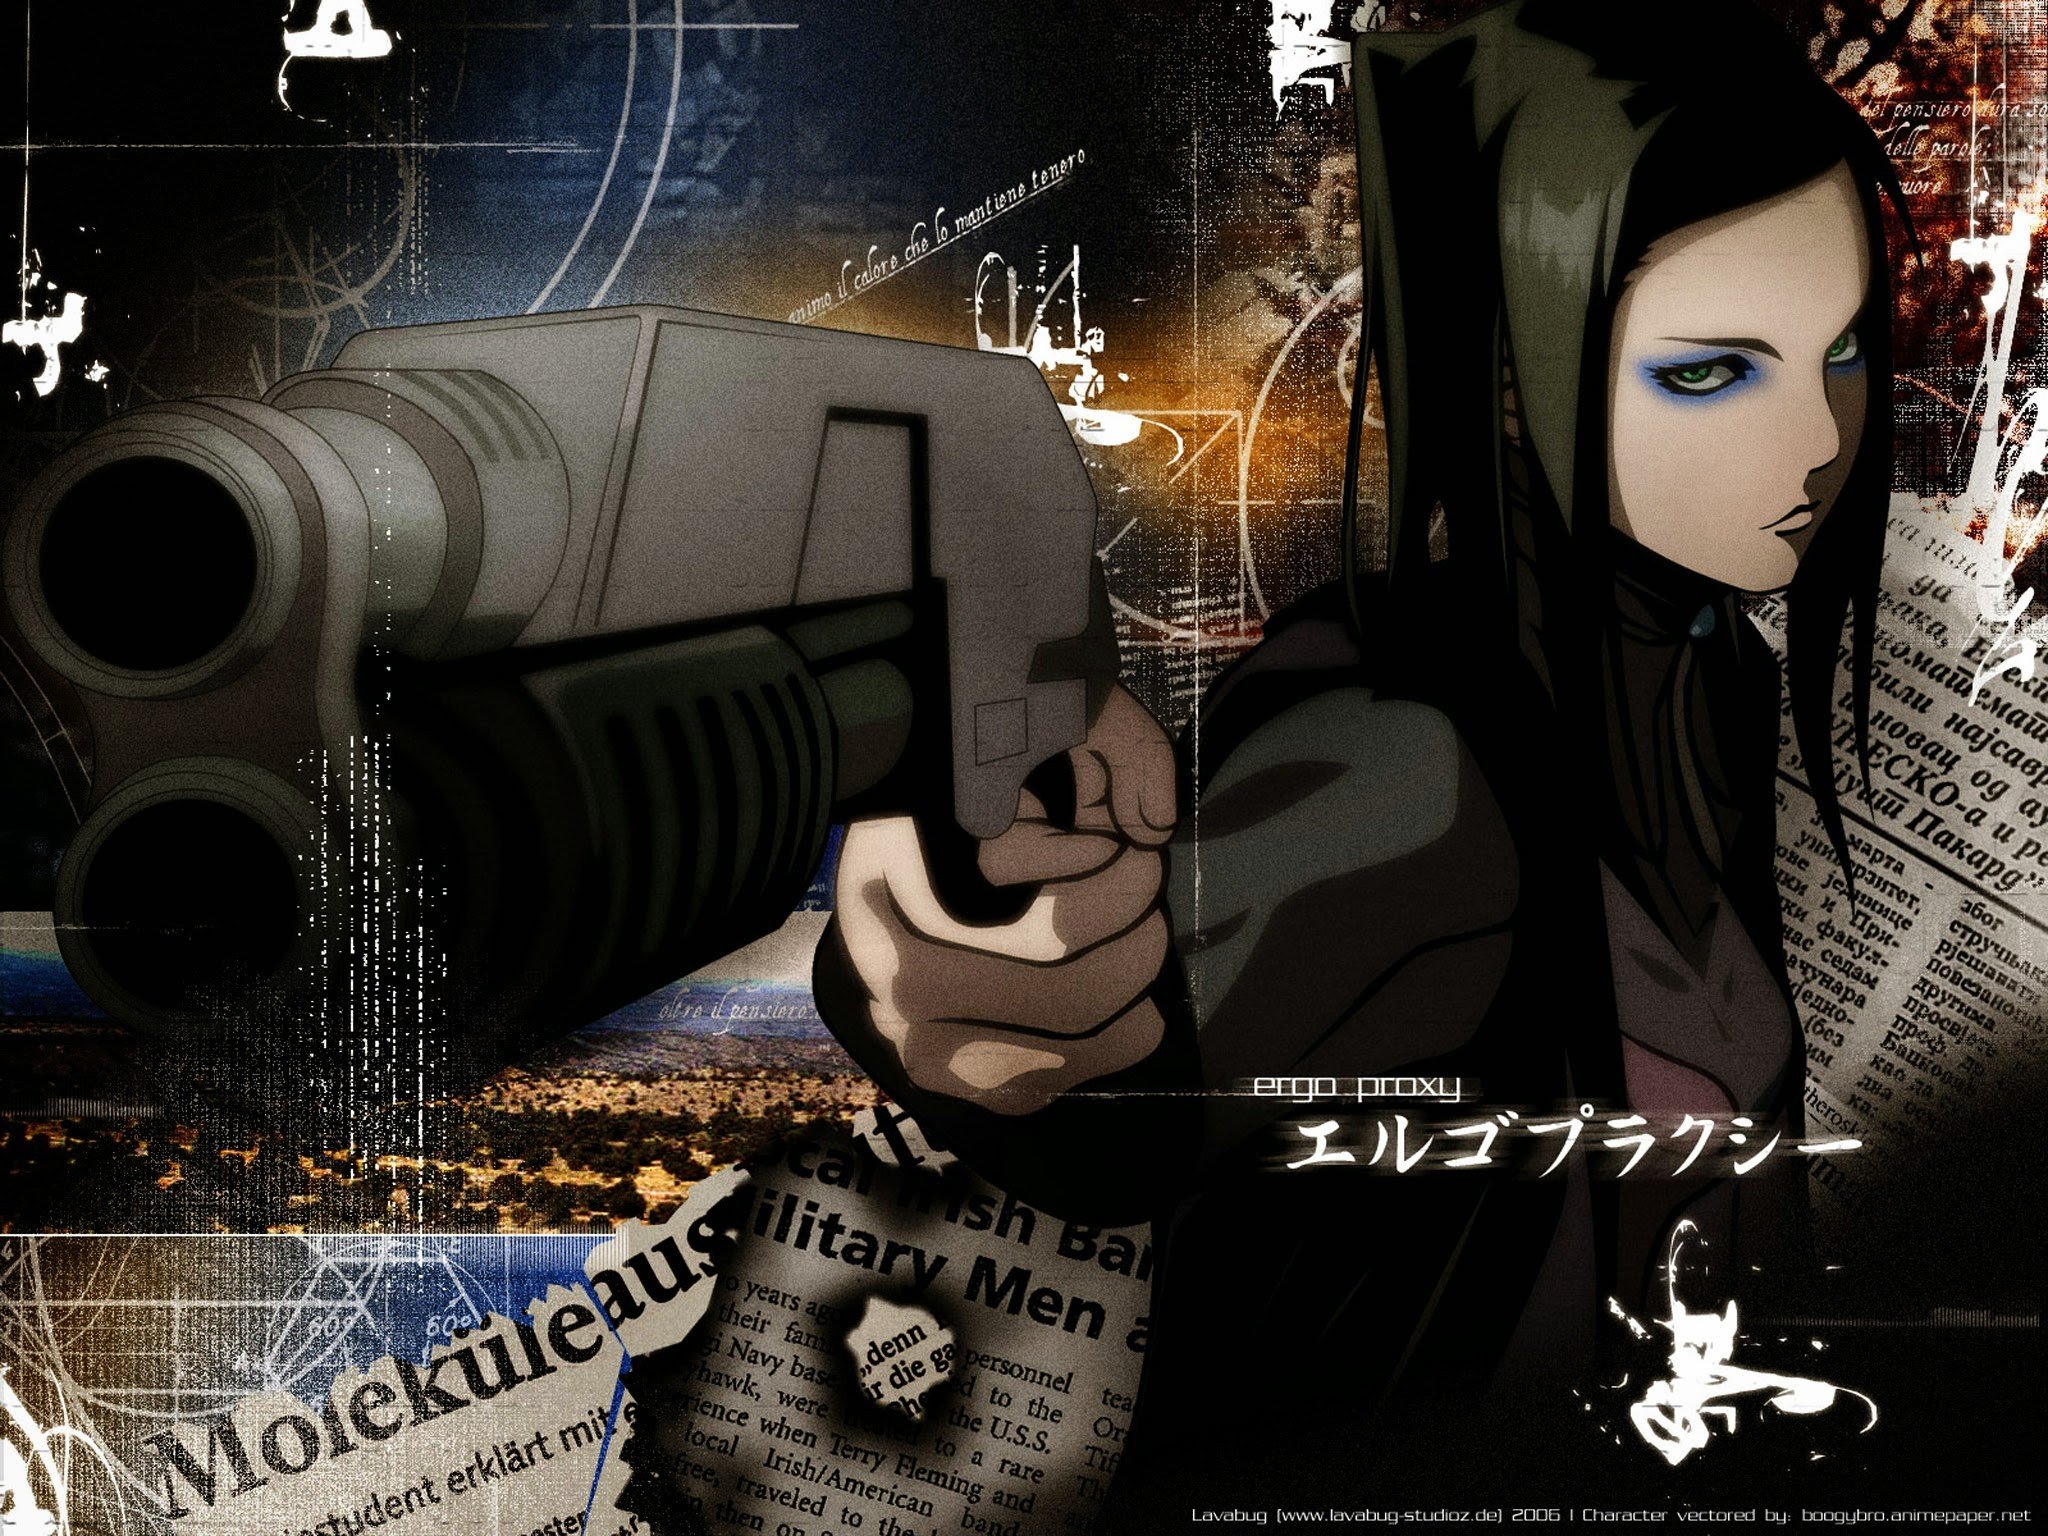 Re-L Mayer II (Ergo Proxy) - Other & Anime Background Wallpapers on Desktop  Nexus (Image 459207)